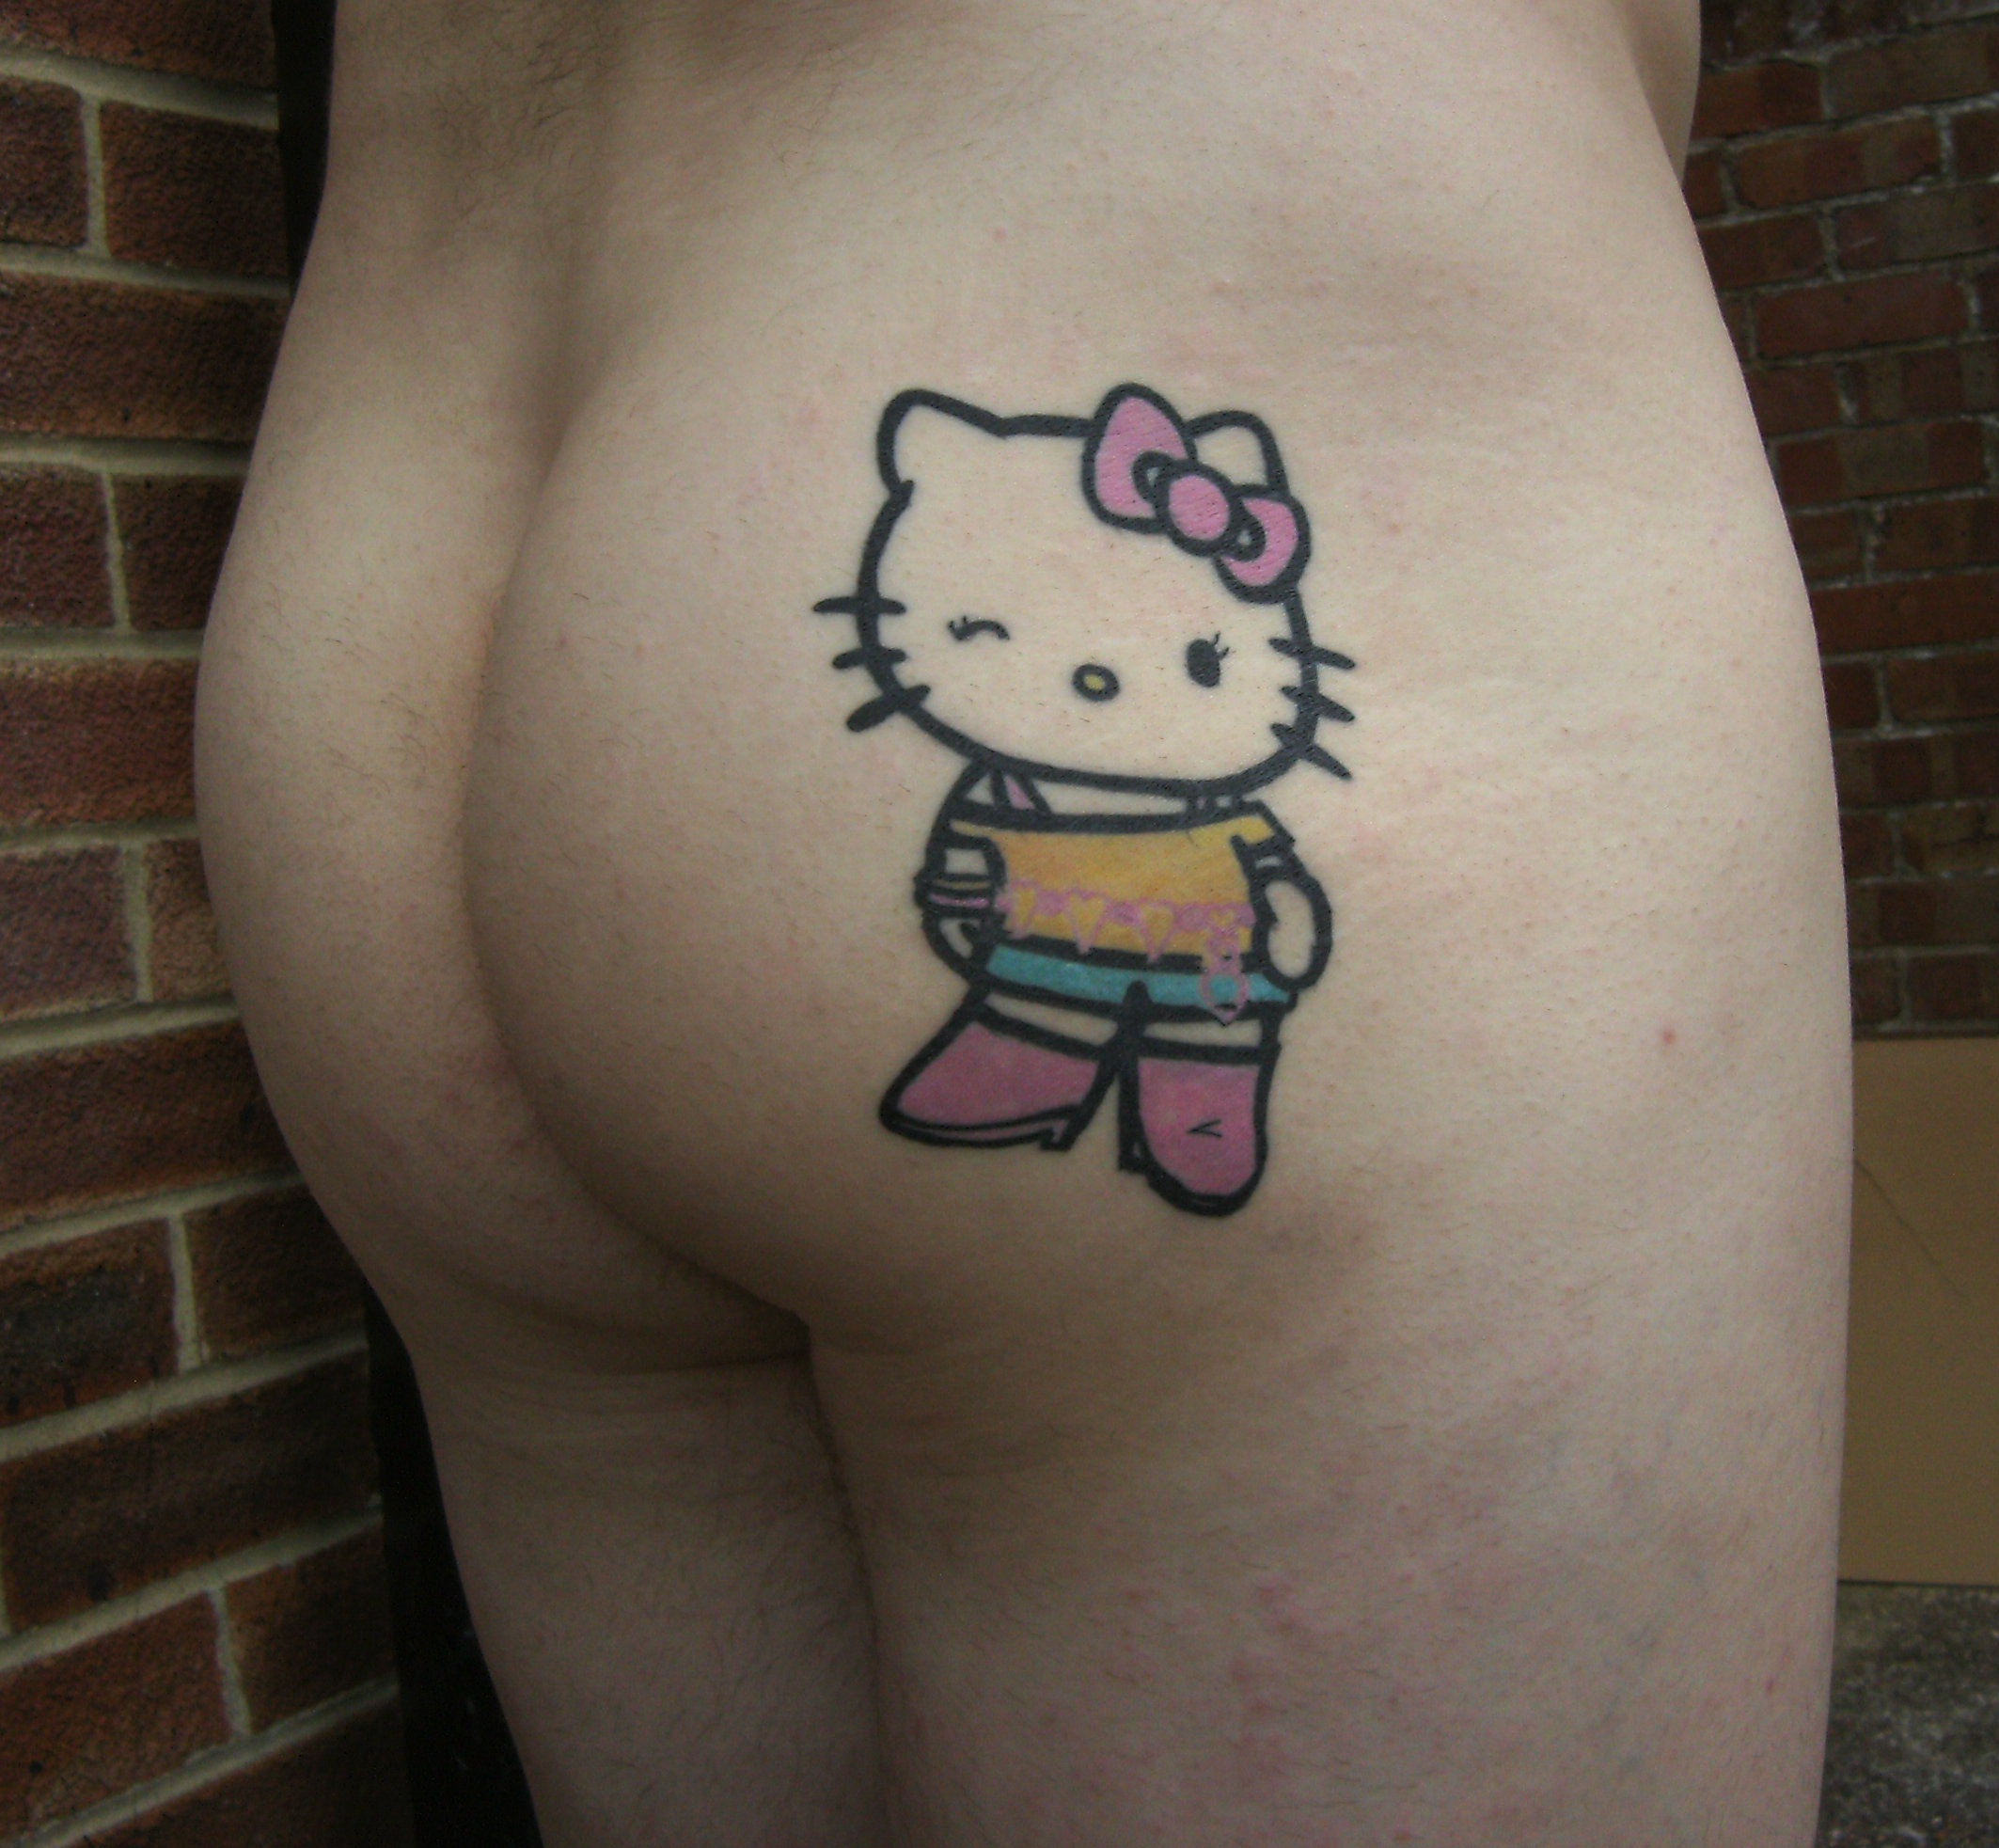 NSFW: Hello Kitty Cheeky Tattoo.